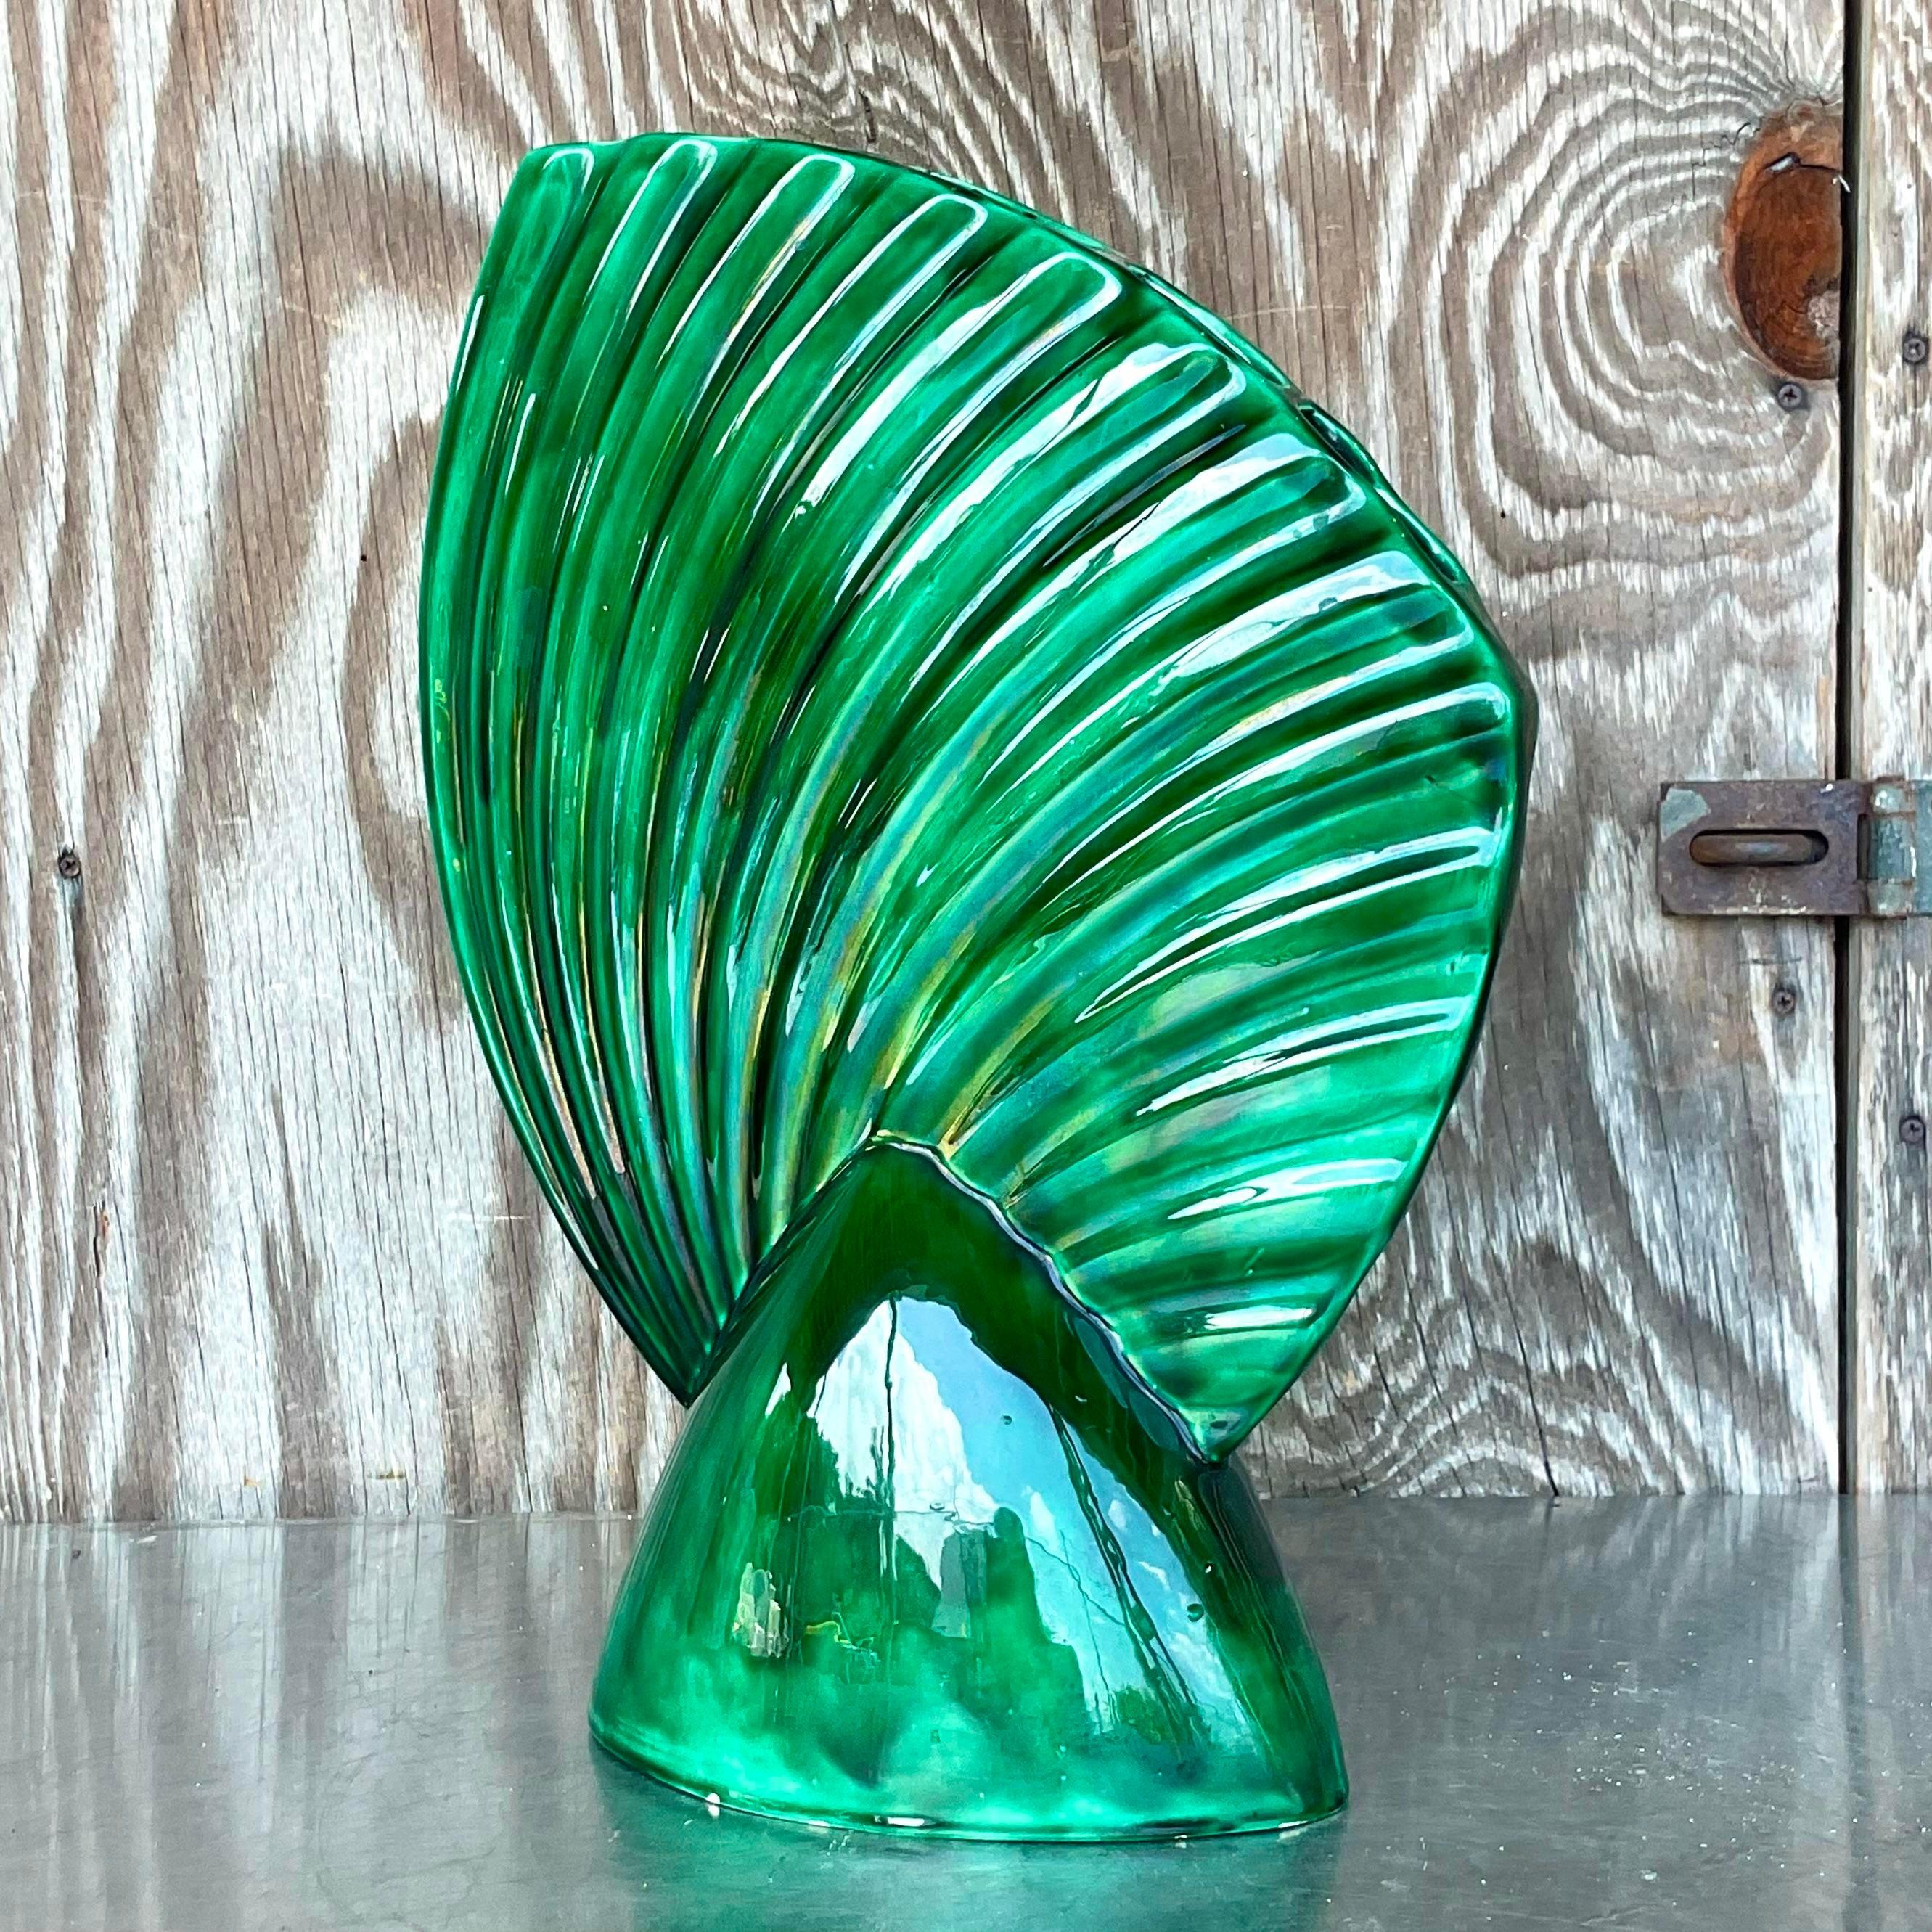 North American Mid 20th Century Vintage Mid-Century Modern Glazed Ceramic Gladiola Vase For Sale